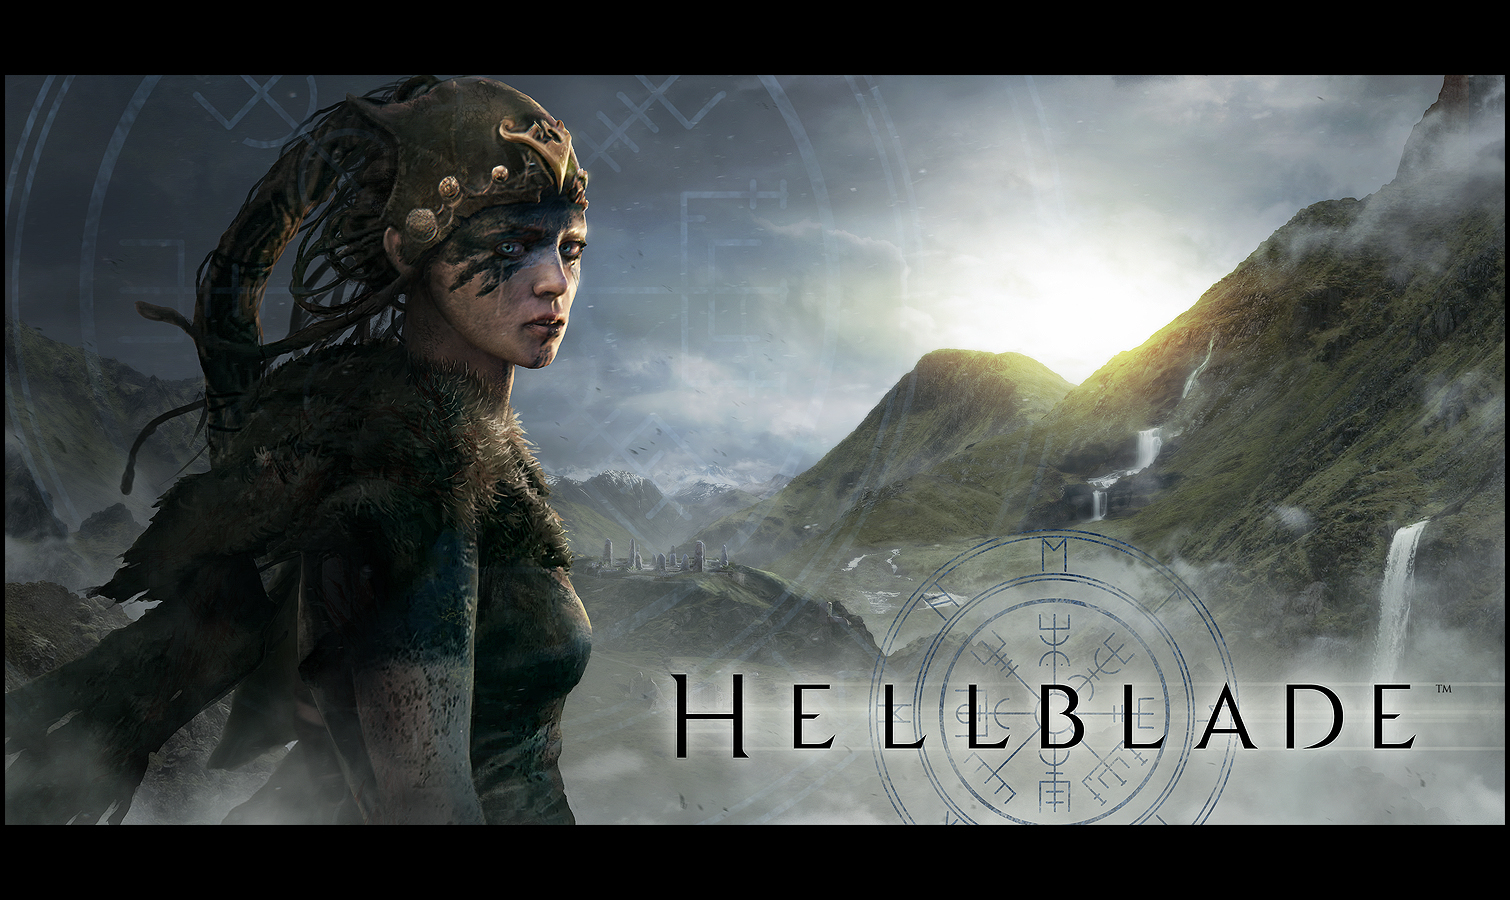 Land of Hellblade